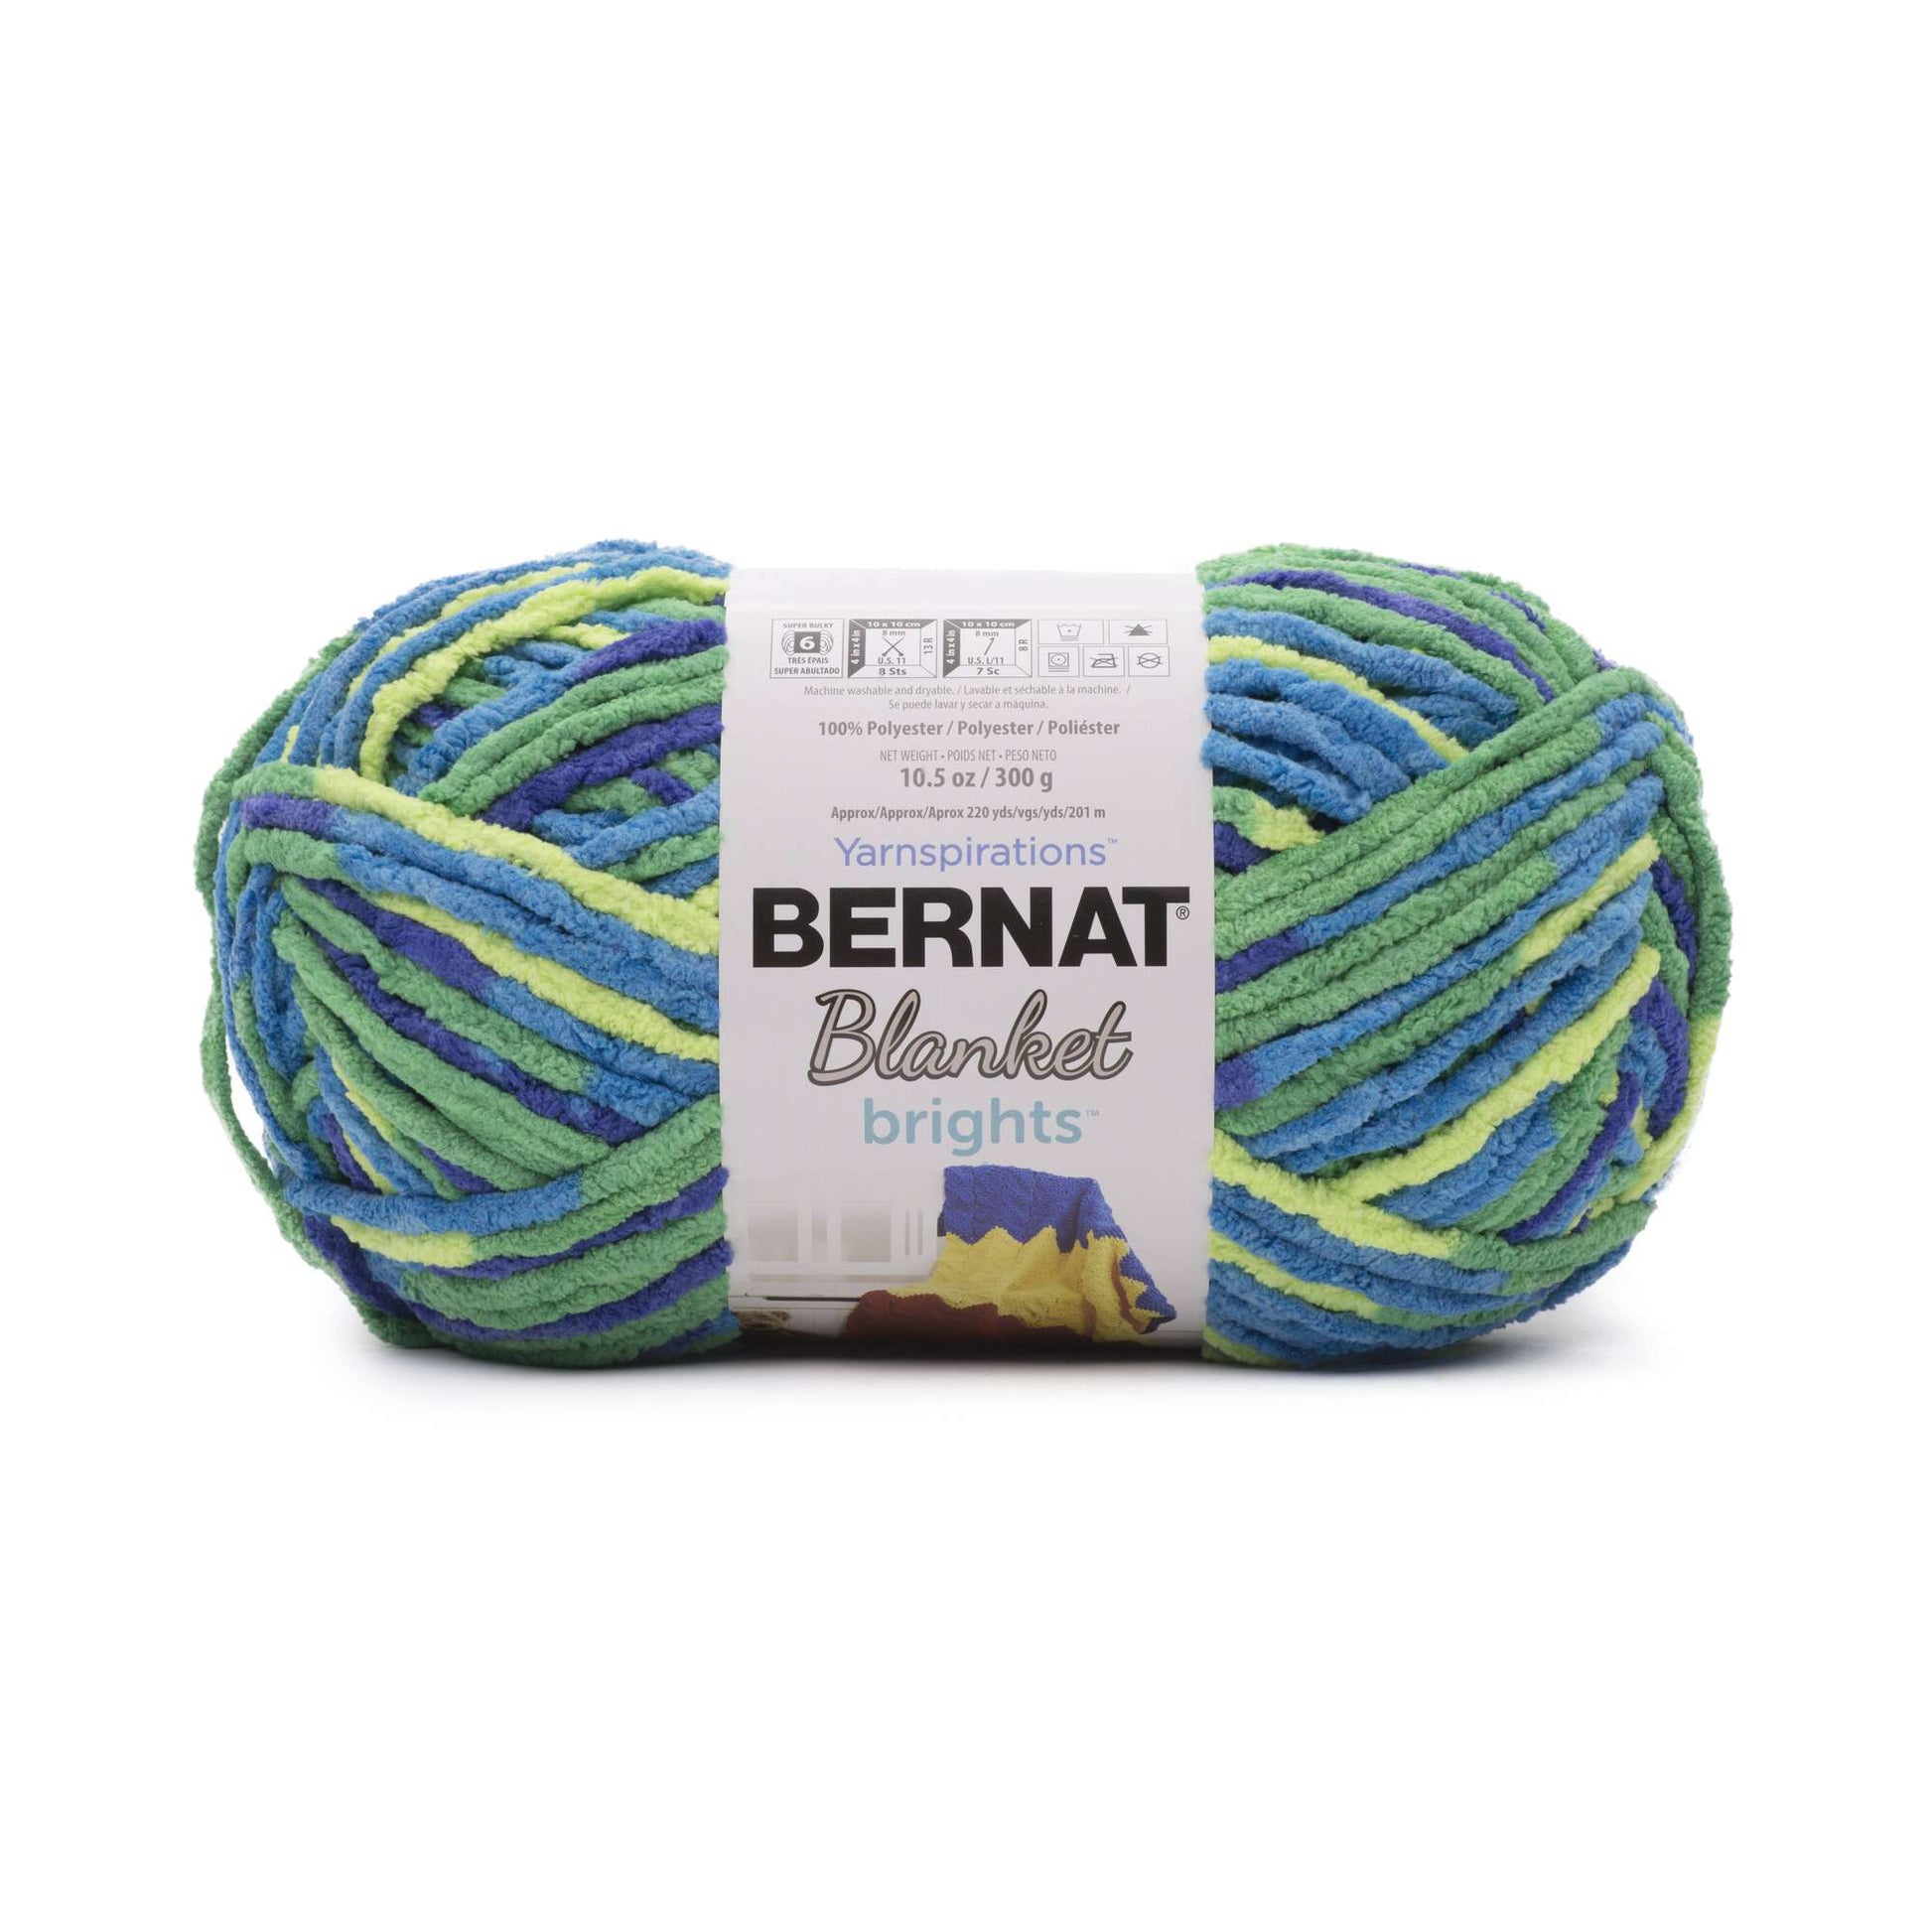 Bernat Blanket Brights Yarn (300g/10.5oz) | Yarnspirations